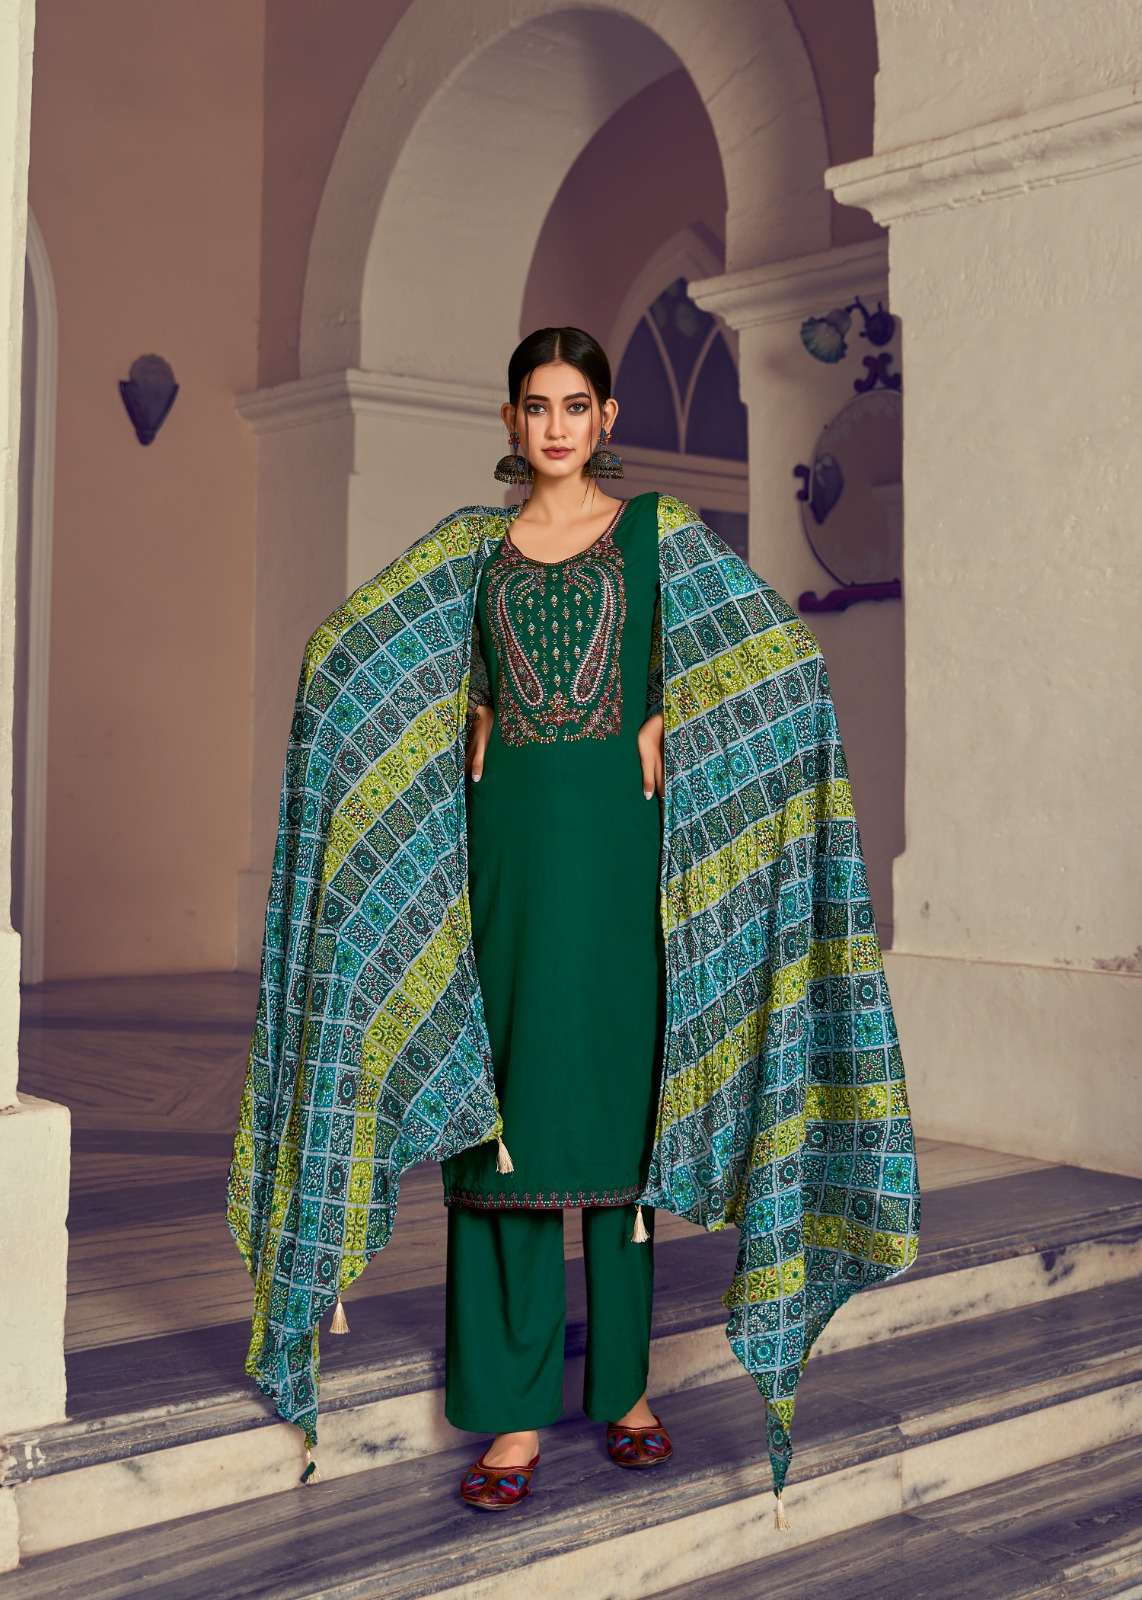 hermitage clothing lehariya 1001-1008 series viscose rayon embroidered work salwar kameez surat